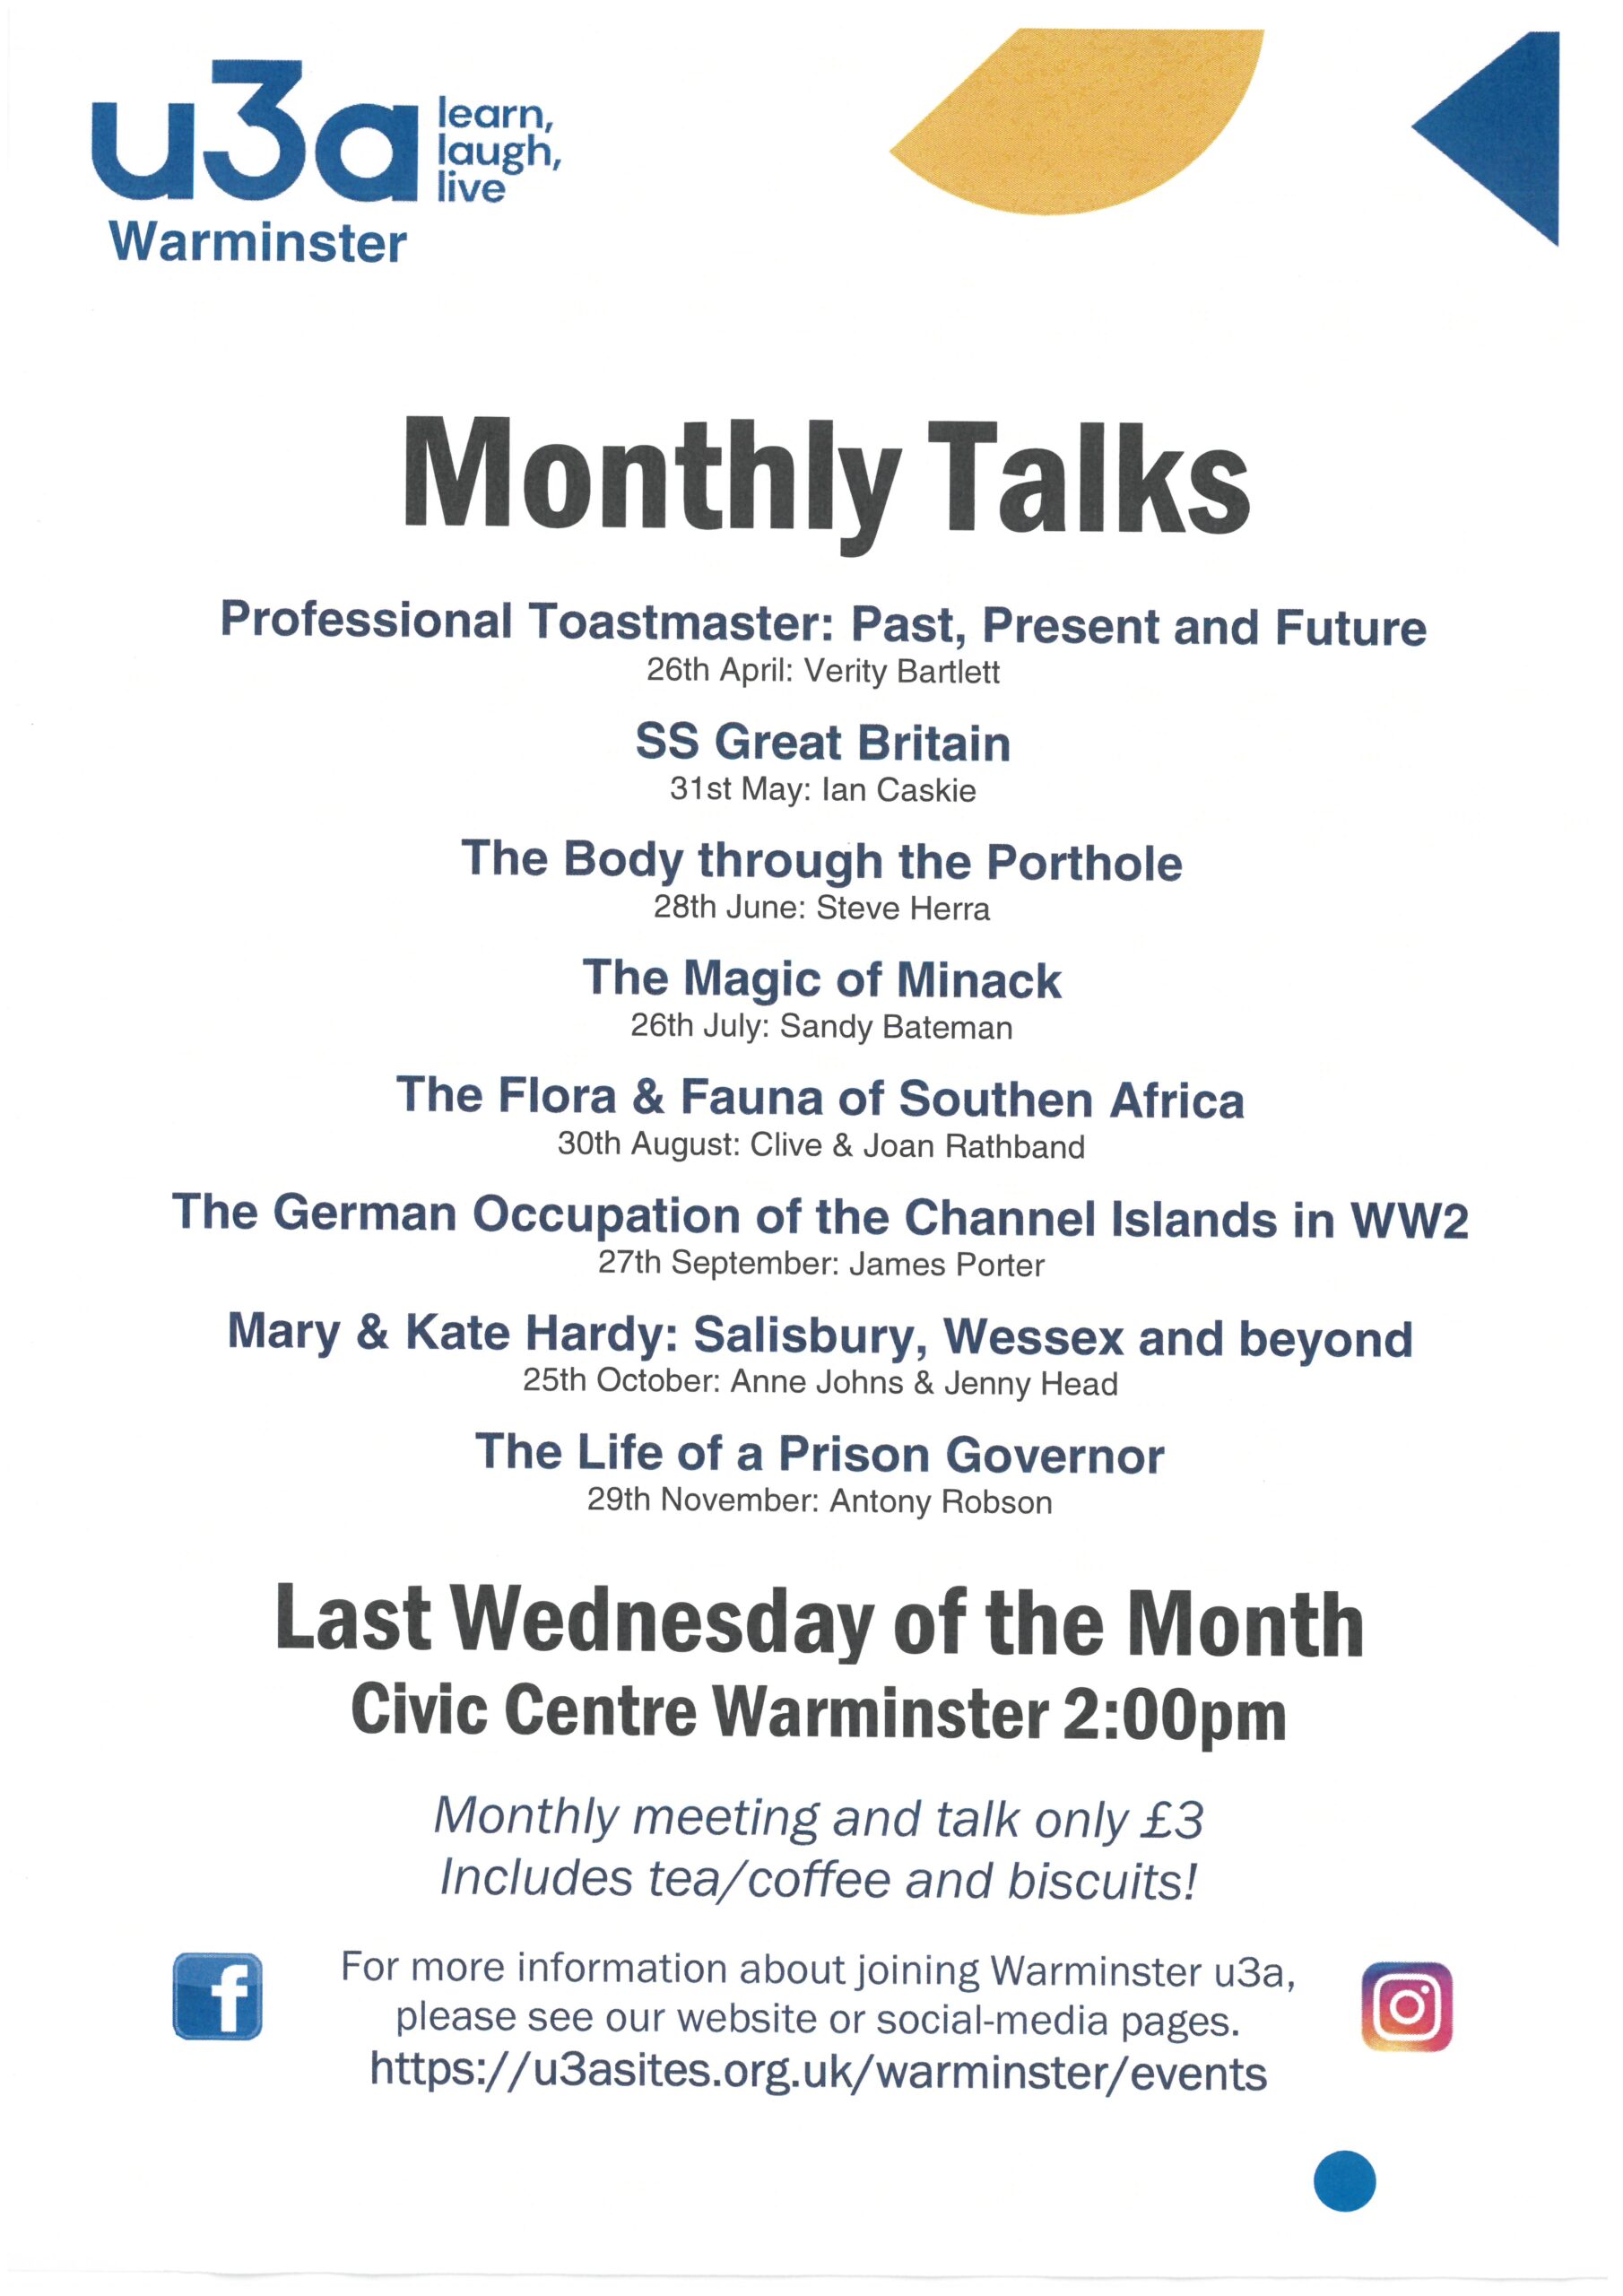 Warminster U3A Monthly Talk - The Magic of Minack by Sandy Bateman